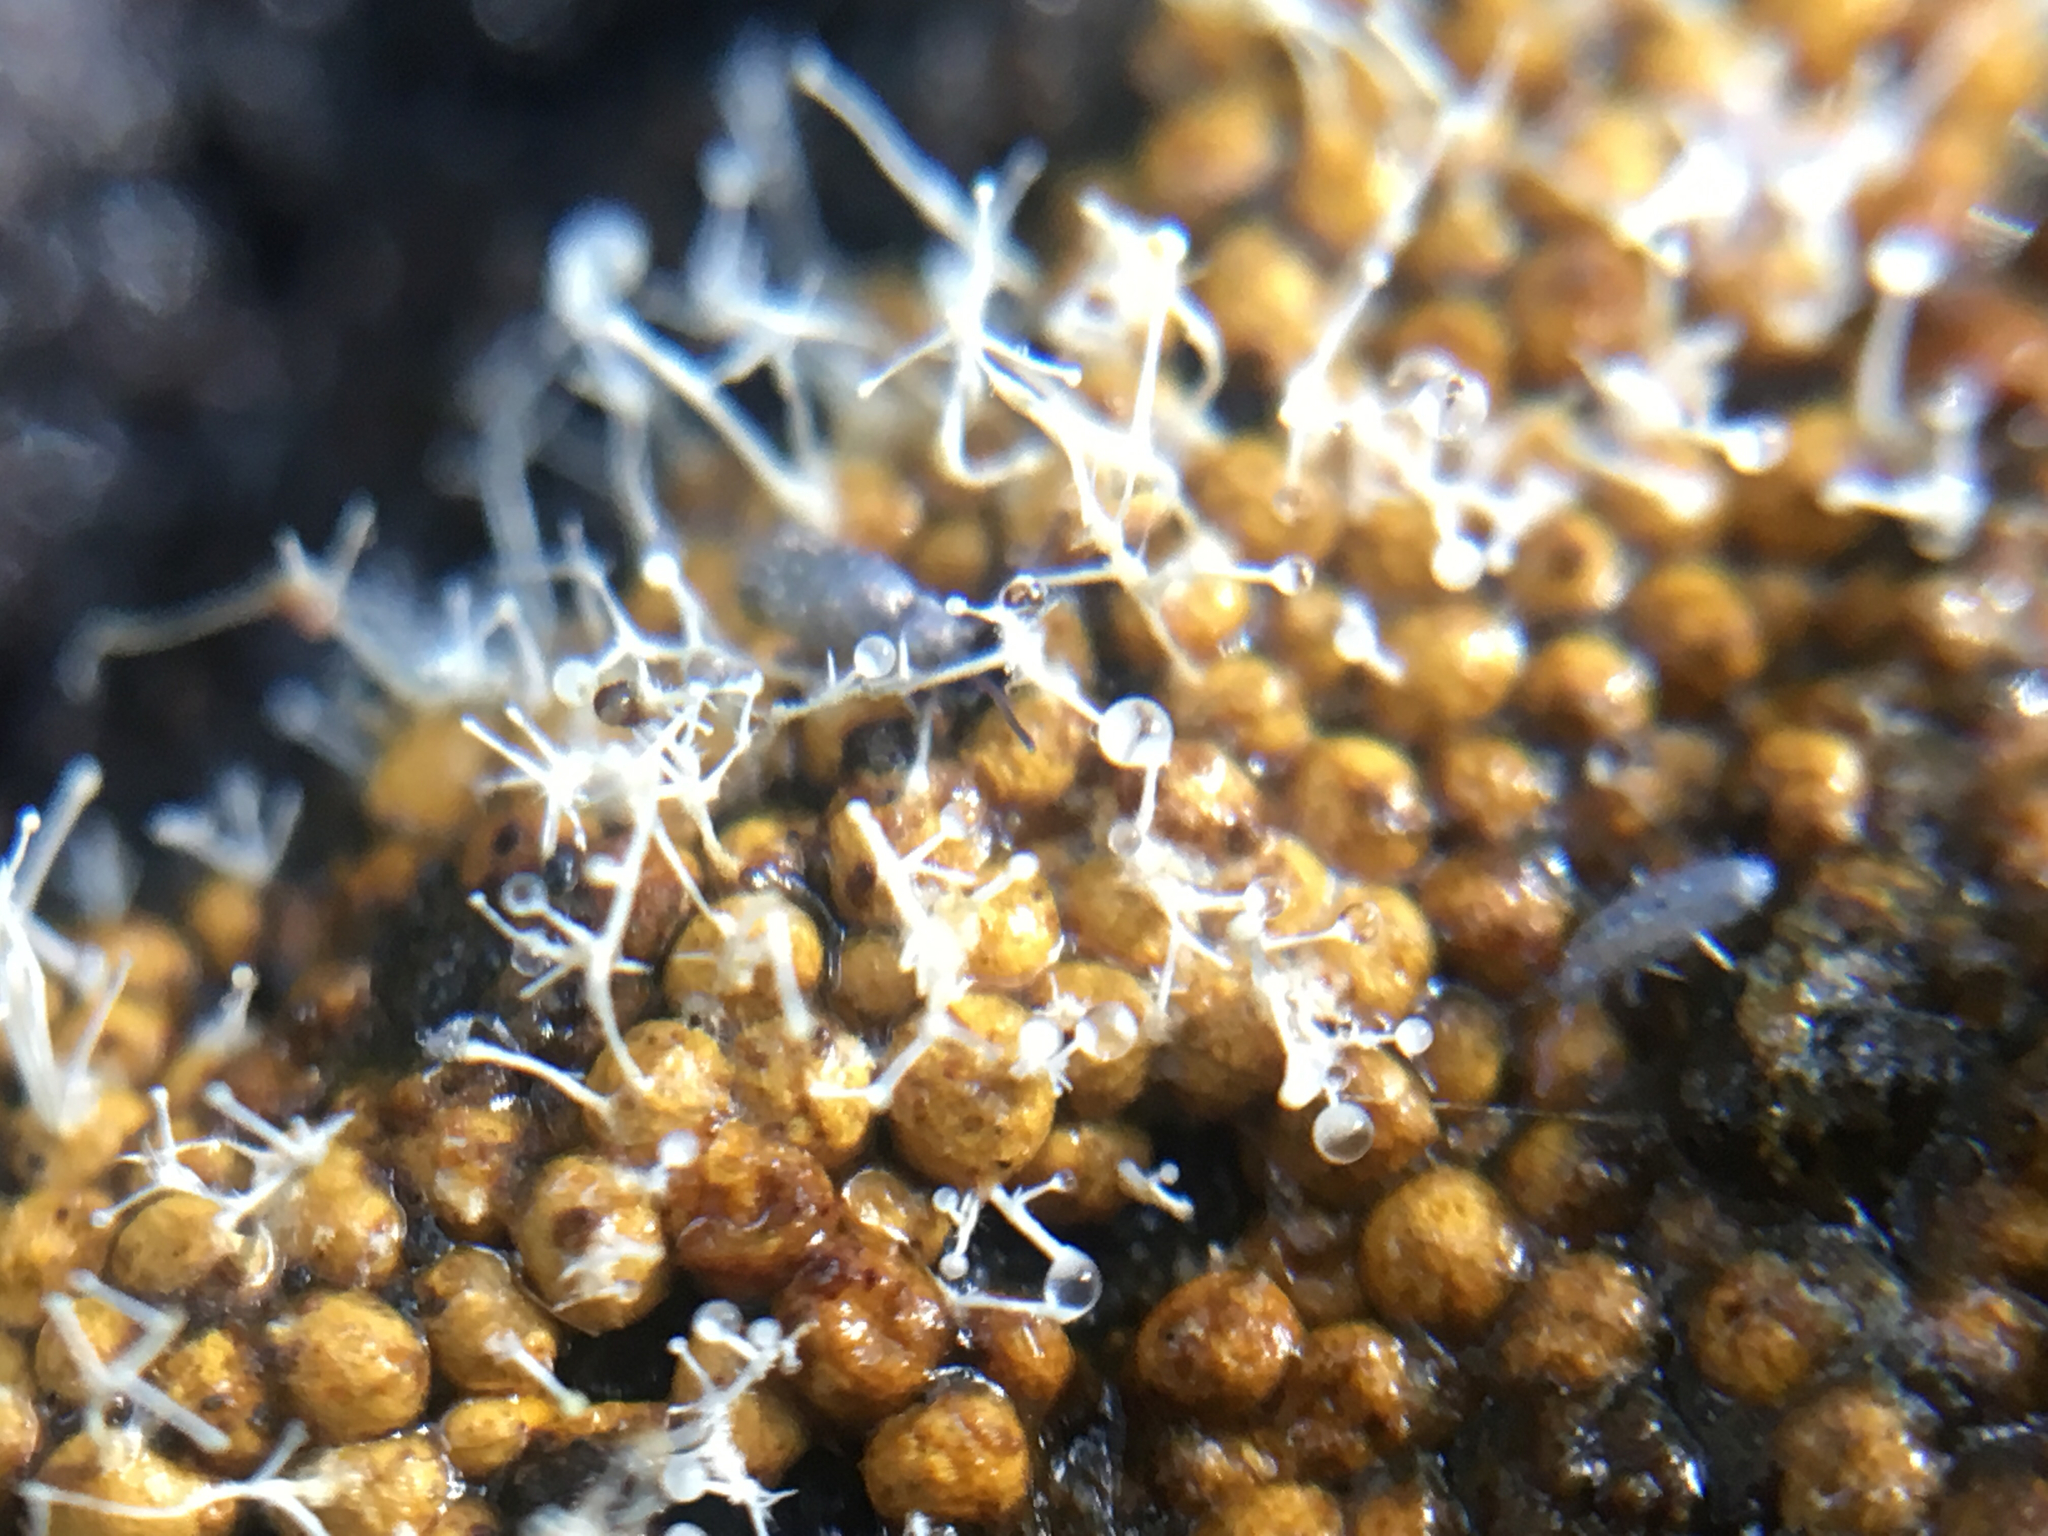 Polycephalomyces tomentosus image